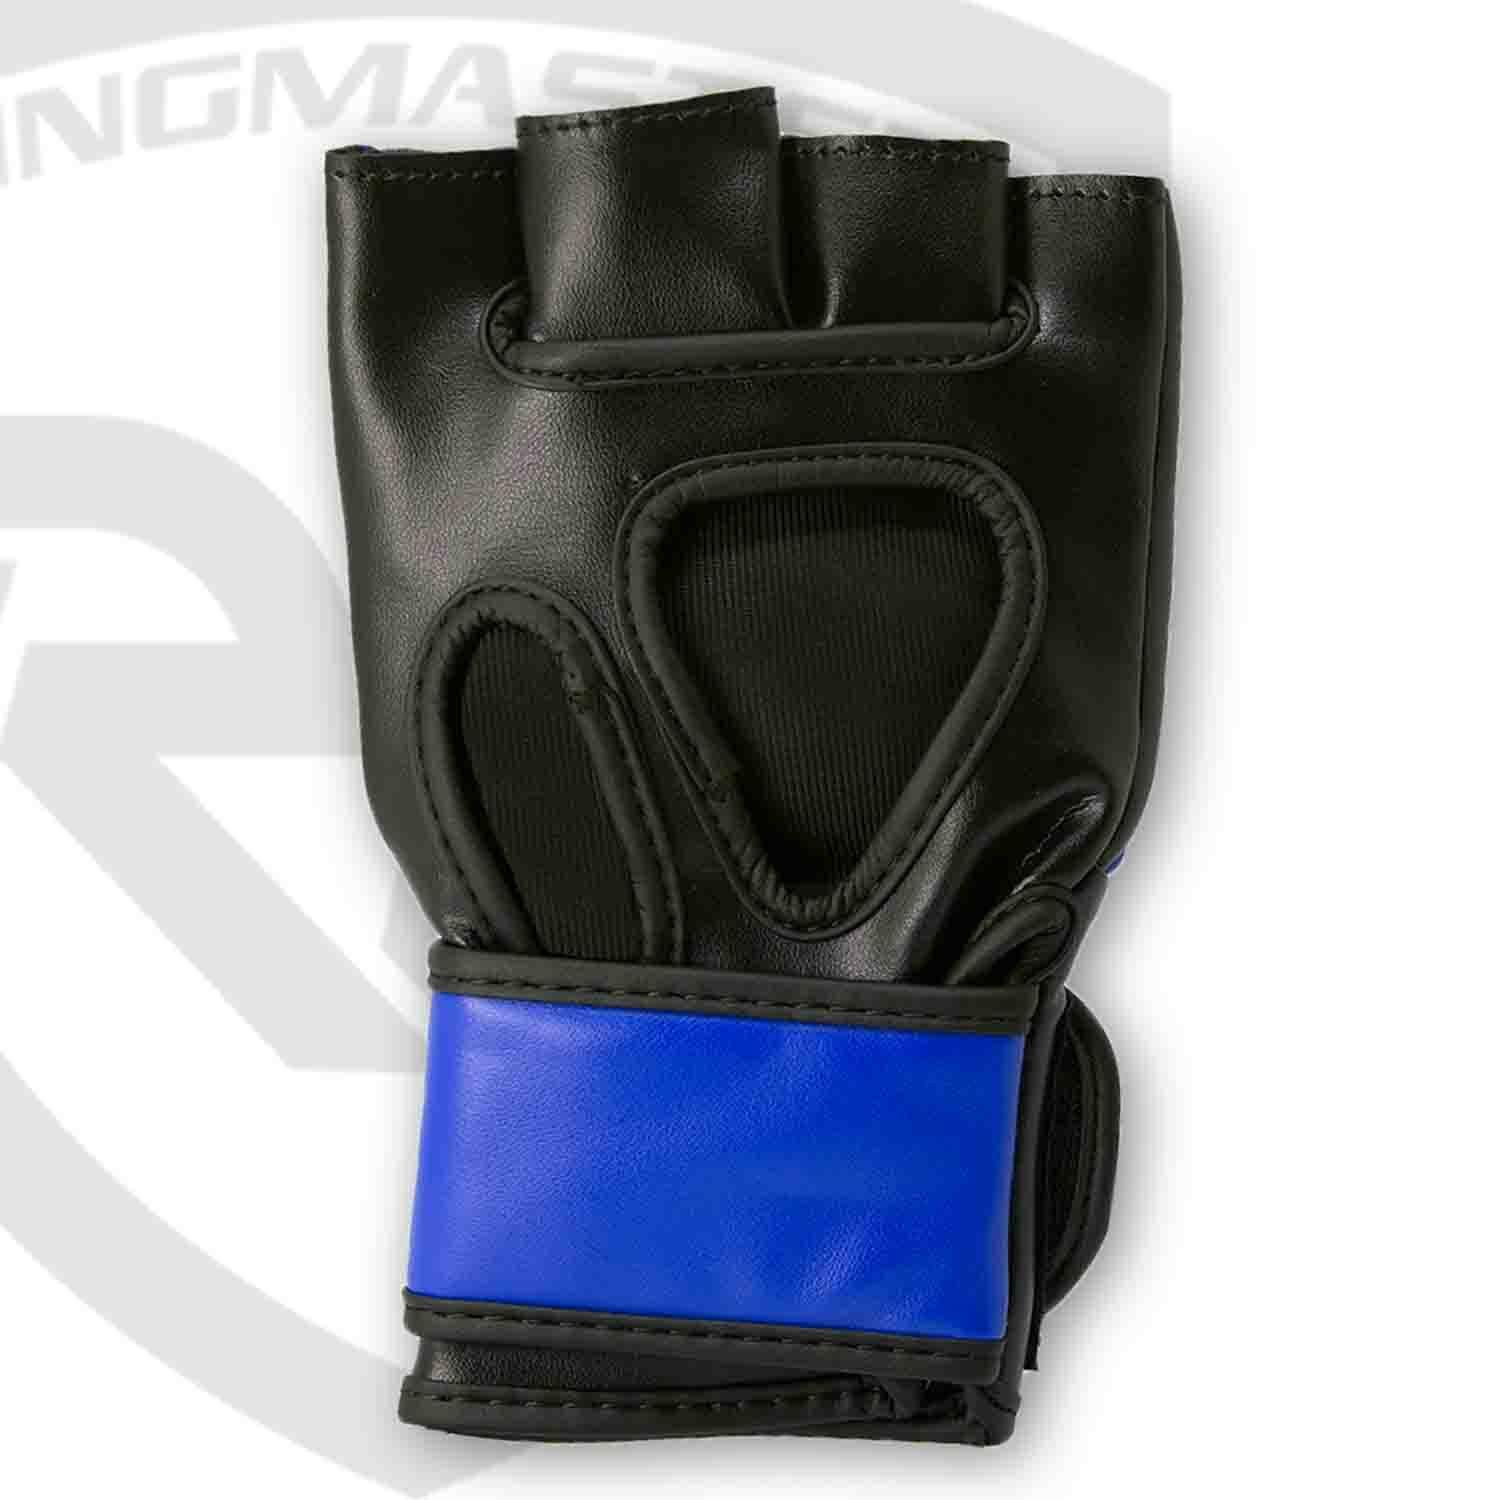 RingMaster Sports Warrior Series MMA Gloves 5oz Blue - RingMaster Sports